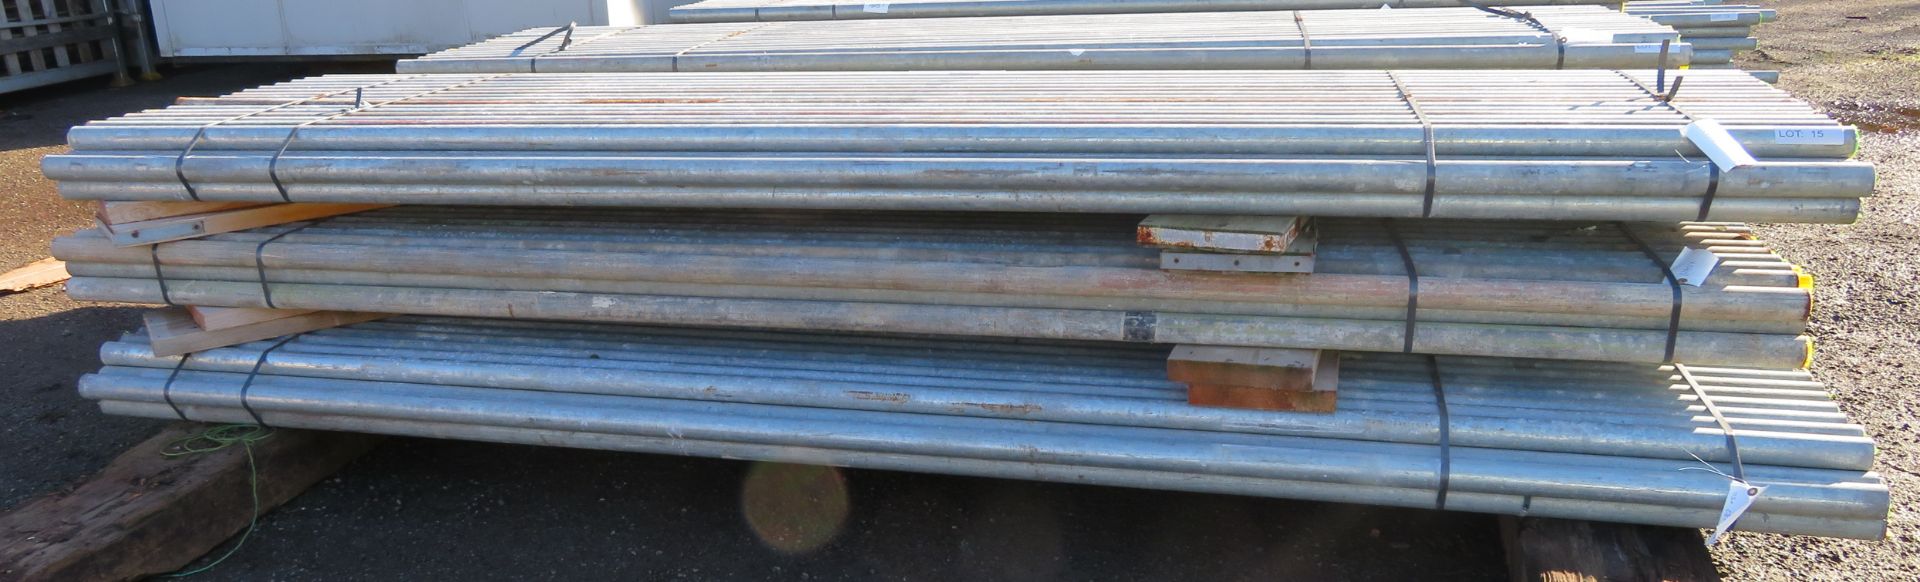 150x 10ft Galvanised Steel Scaffolding Poles 48mm Diameter x 4mm Thick.